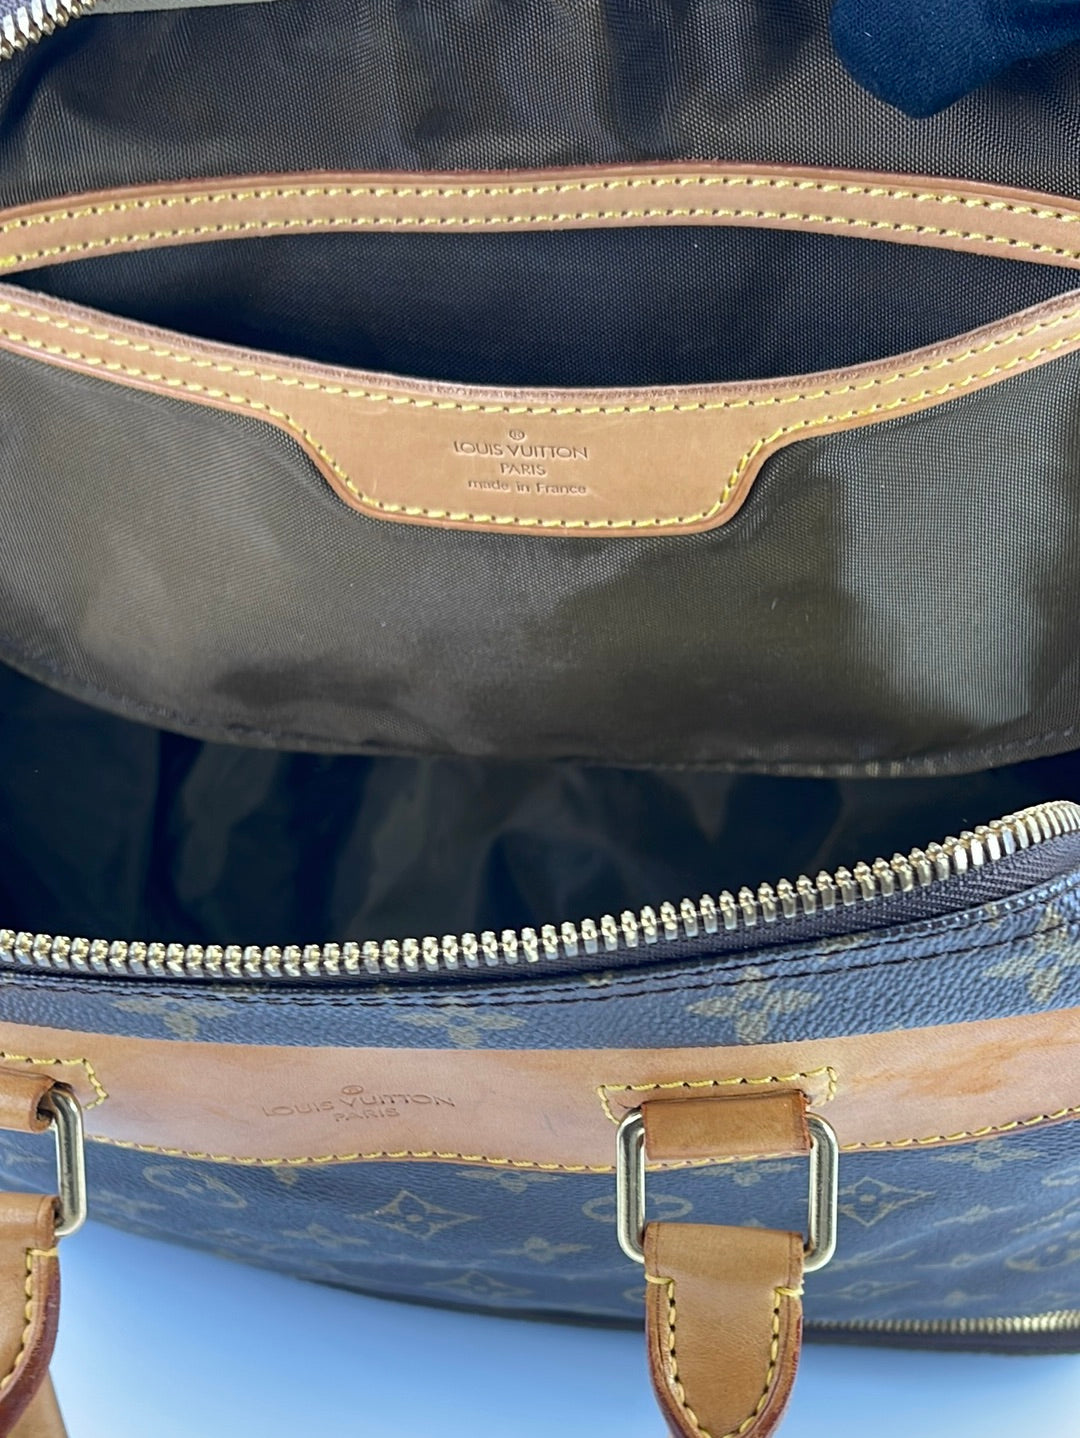 PRELOVED Louis Vuitton Monogram Evasion Boston Travel Hand Bag VI0996 –  KimmieBBags LLC